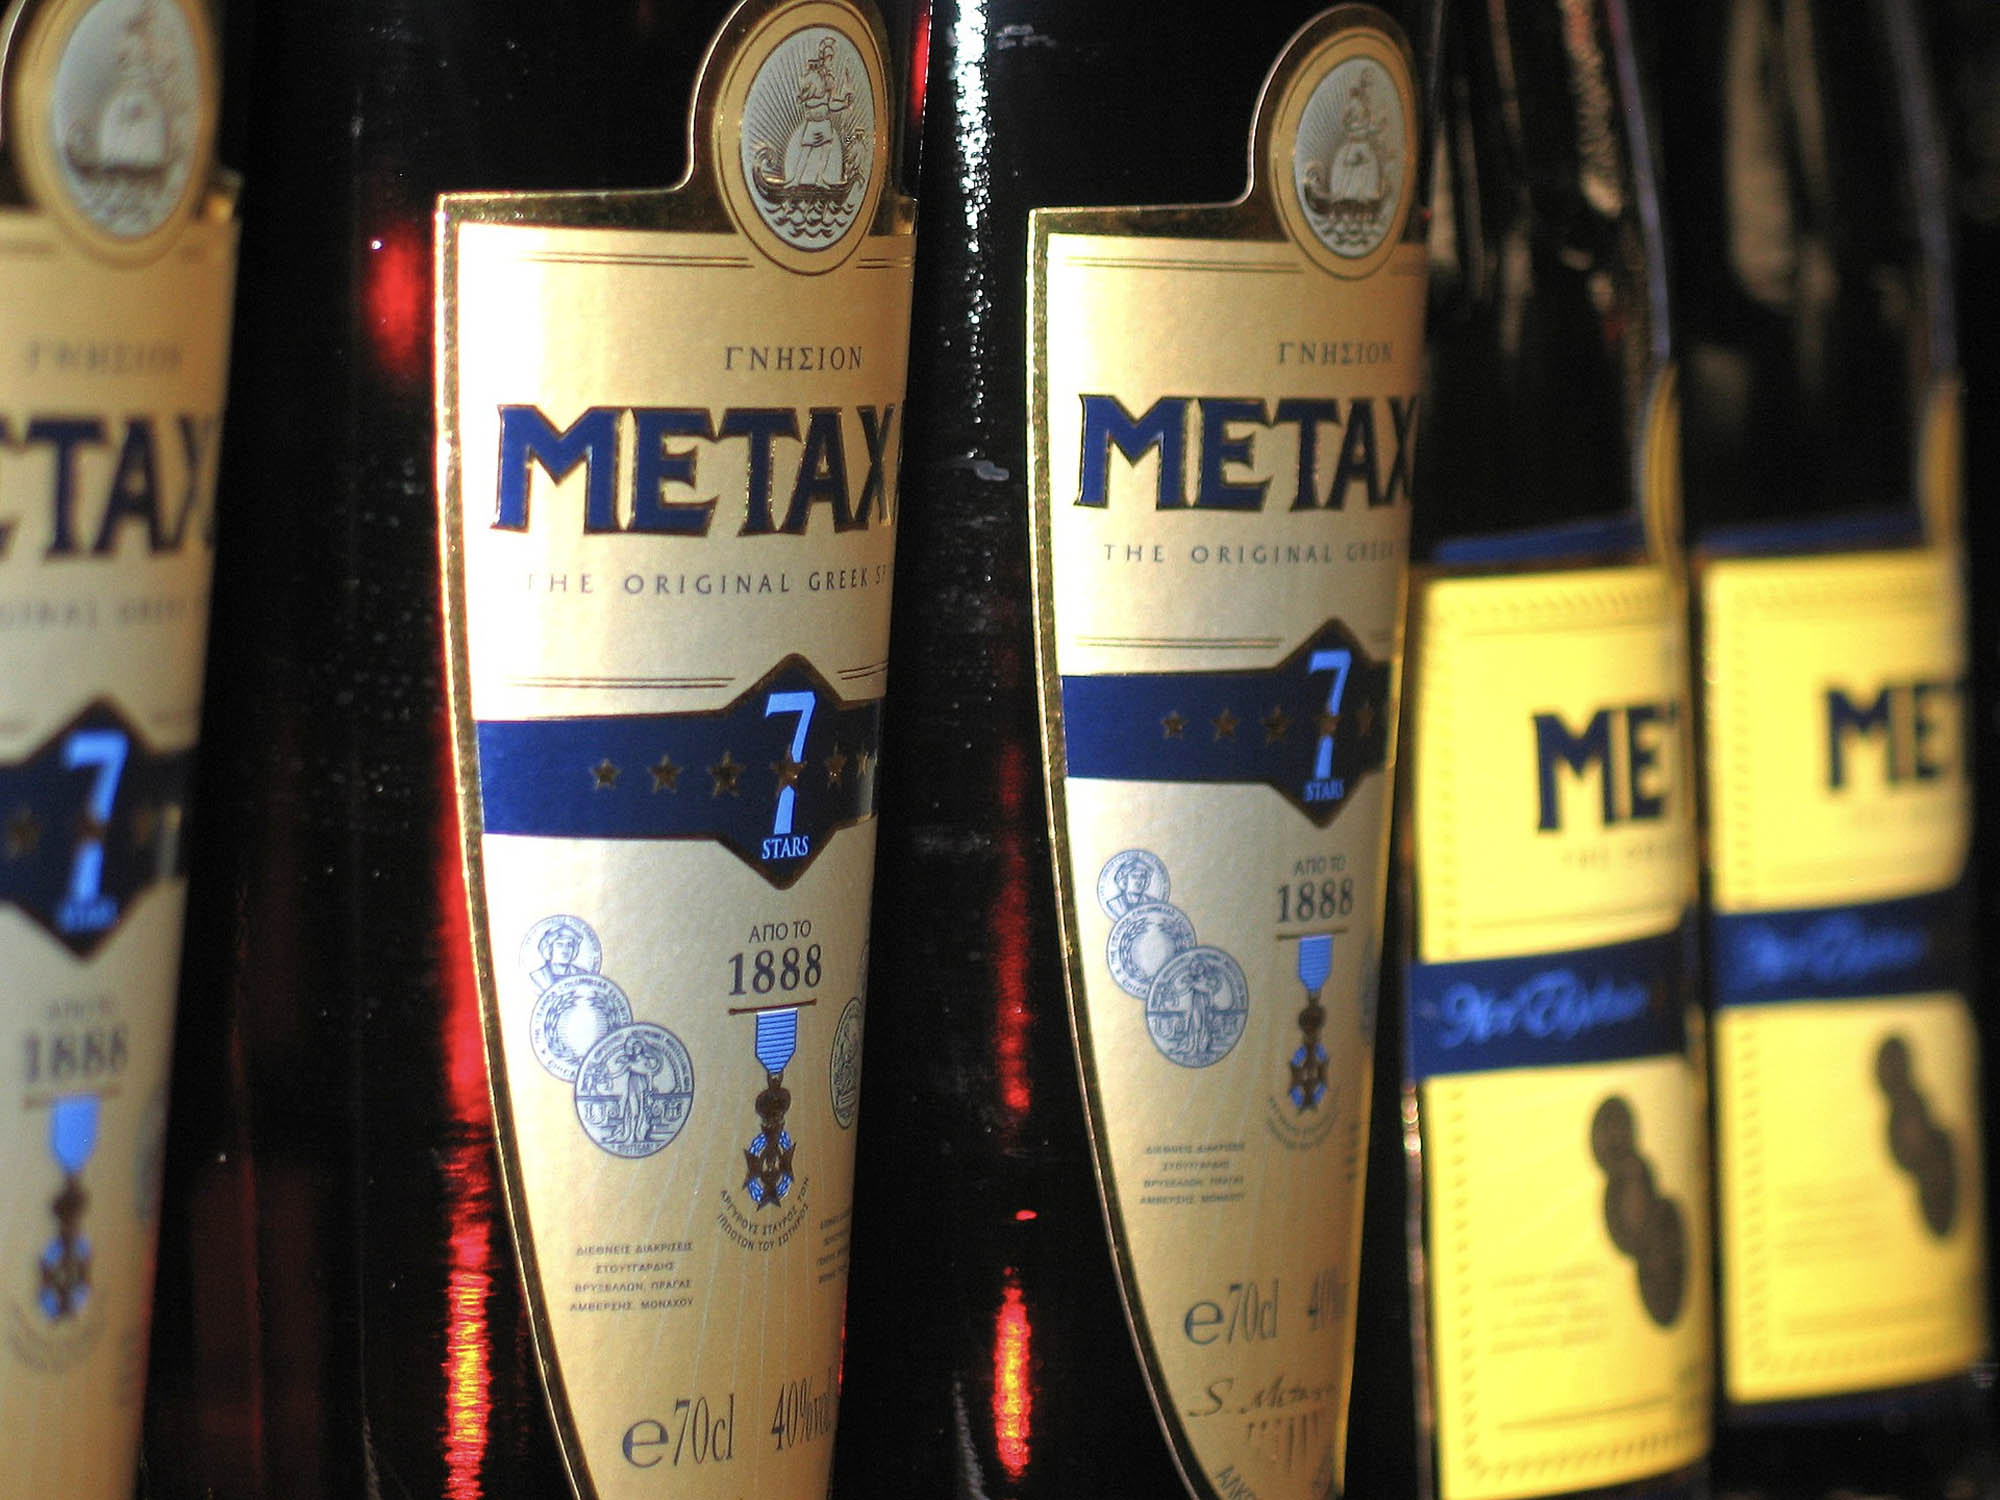 metaxa, zdjecia butelek